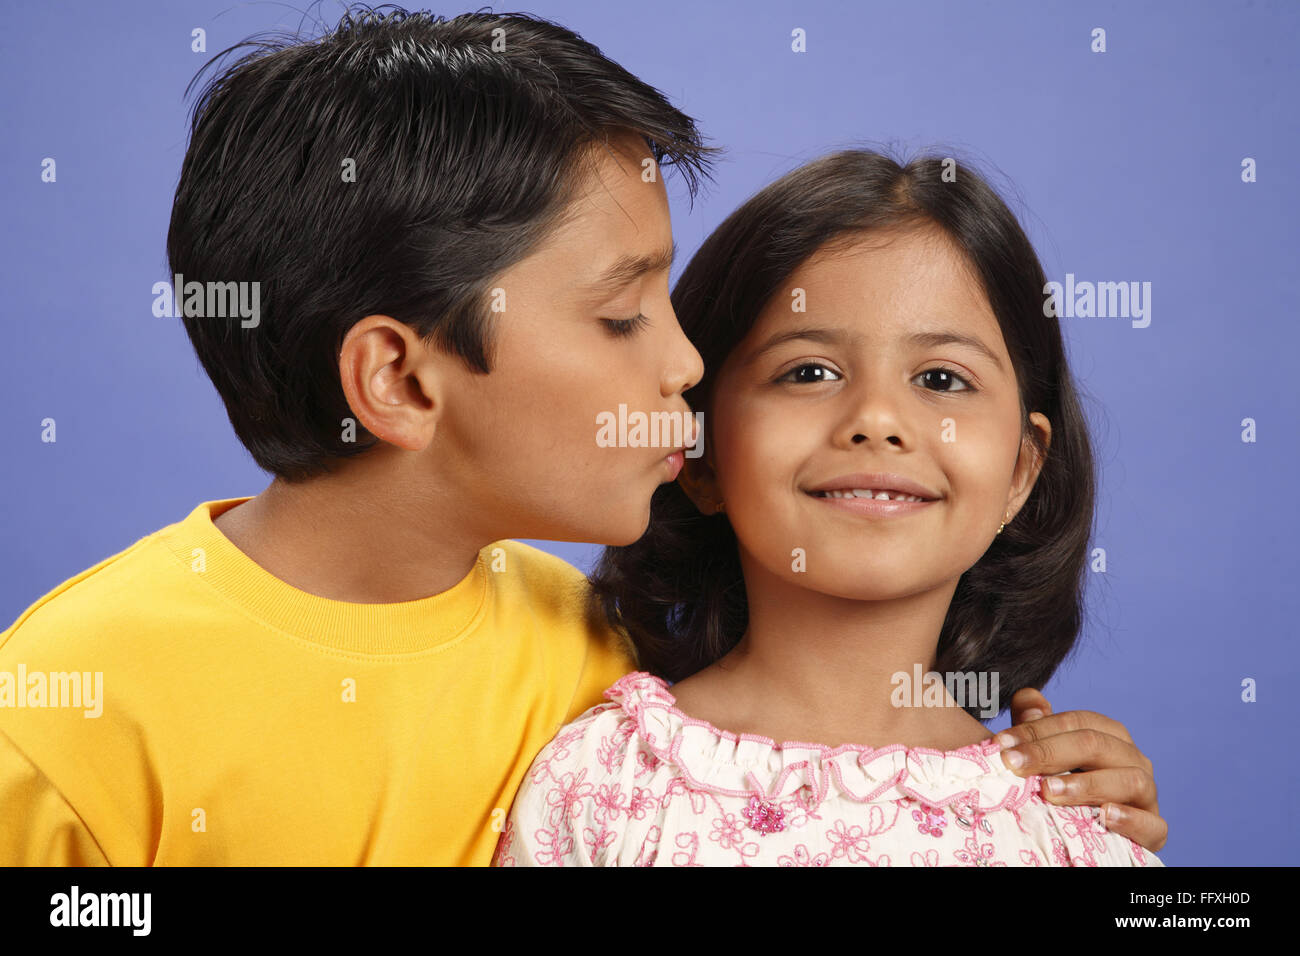 Ten year old boy kissing eight year old girl's cheek MR#703U,703V Stock Photo